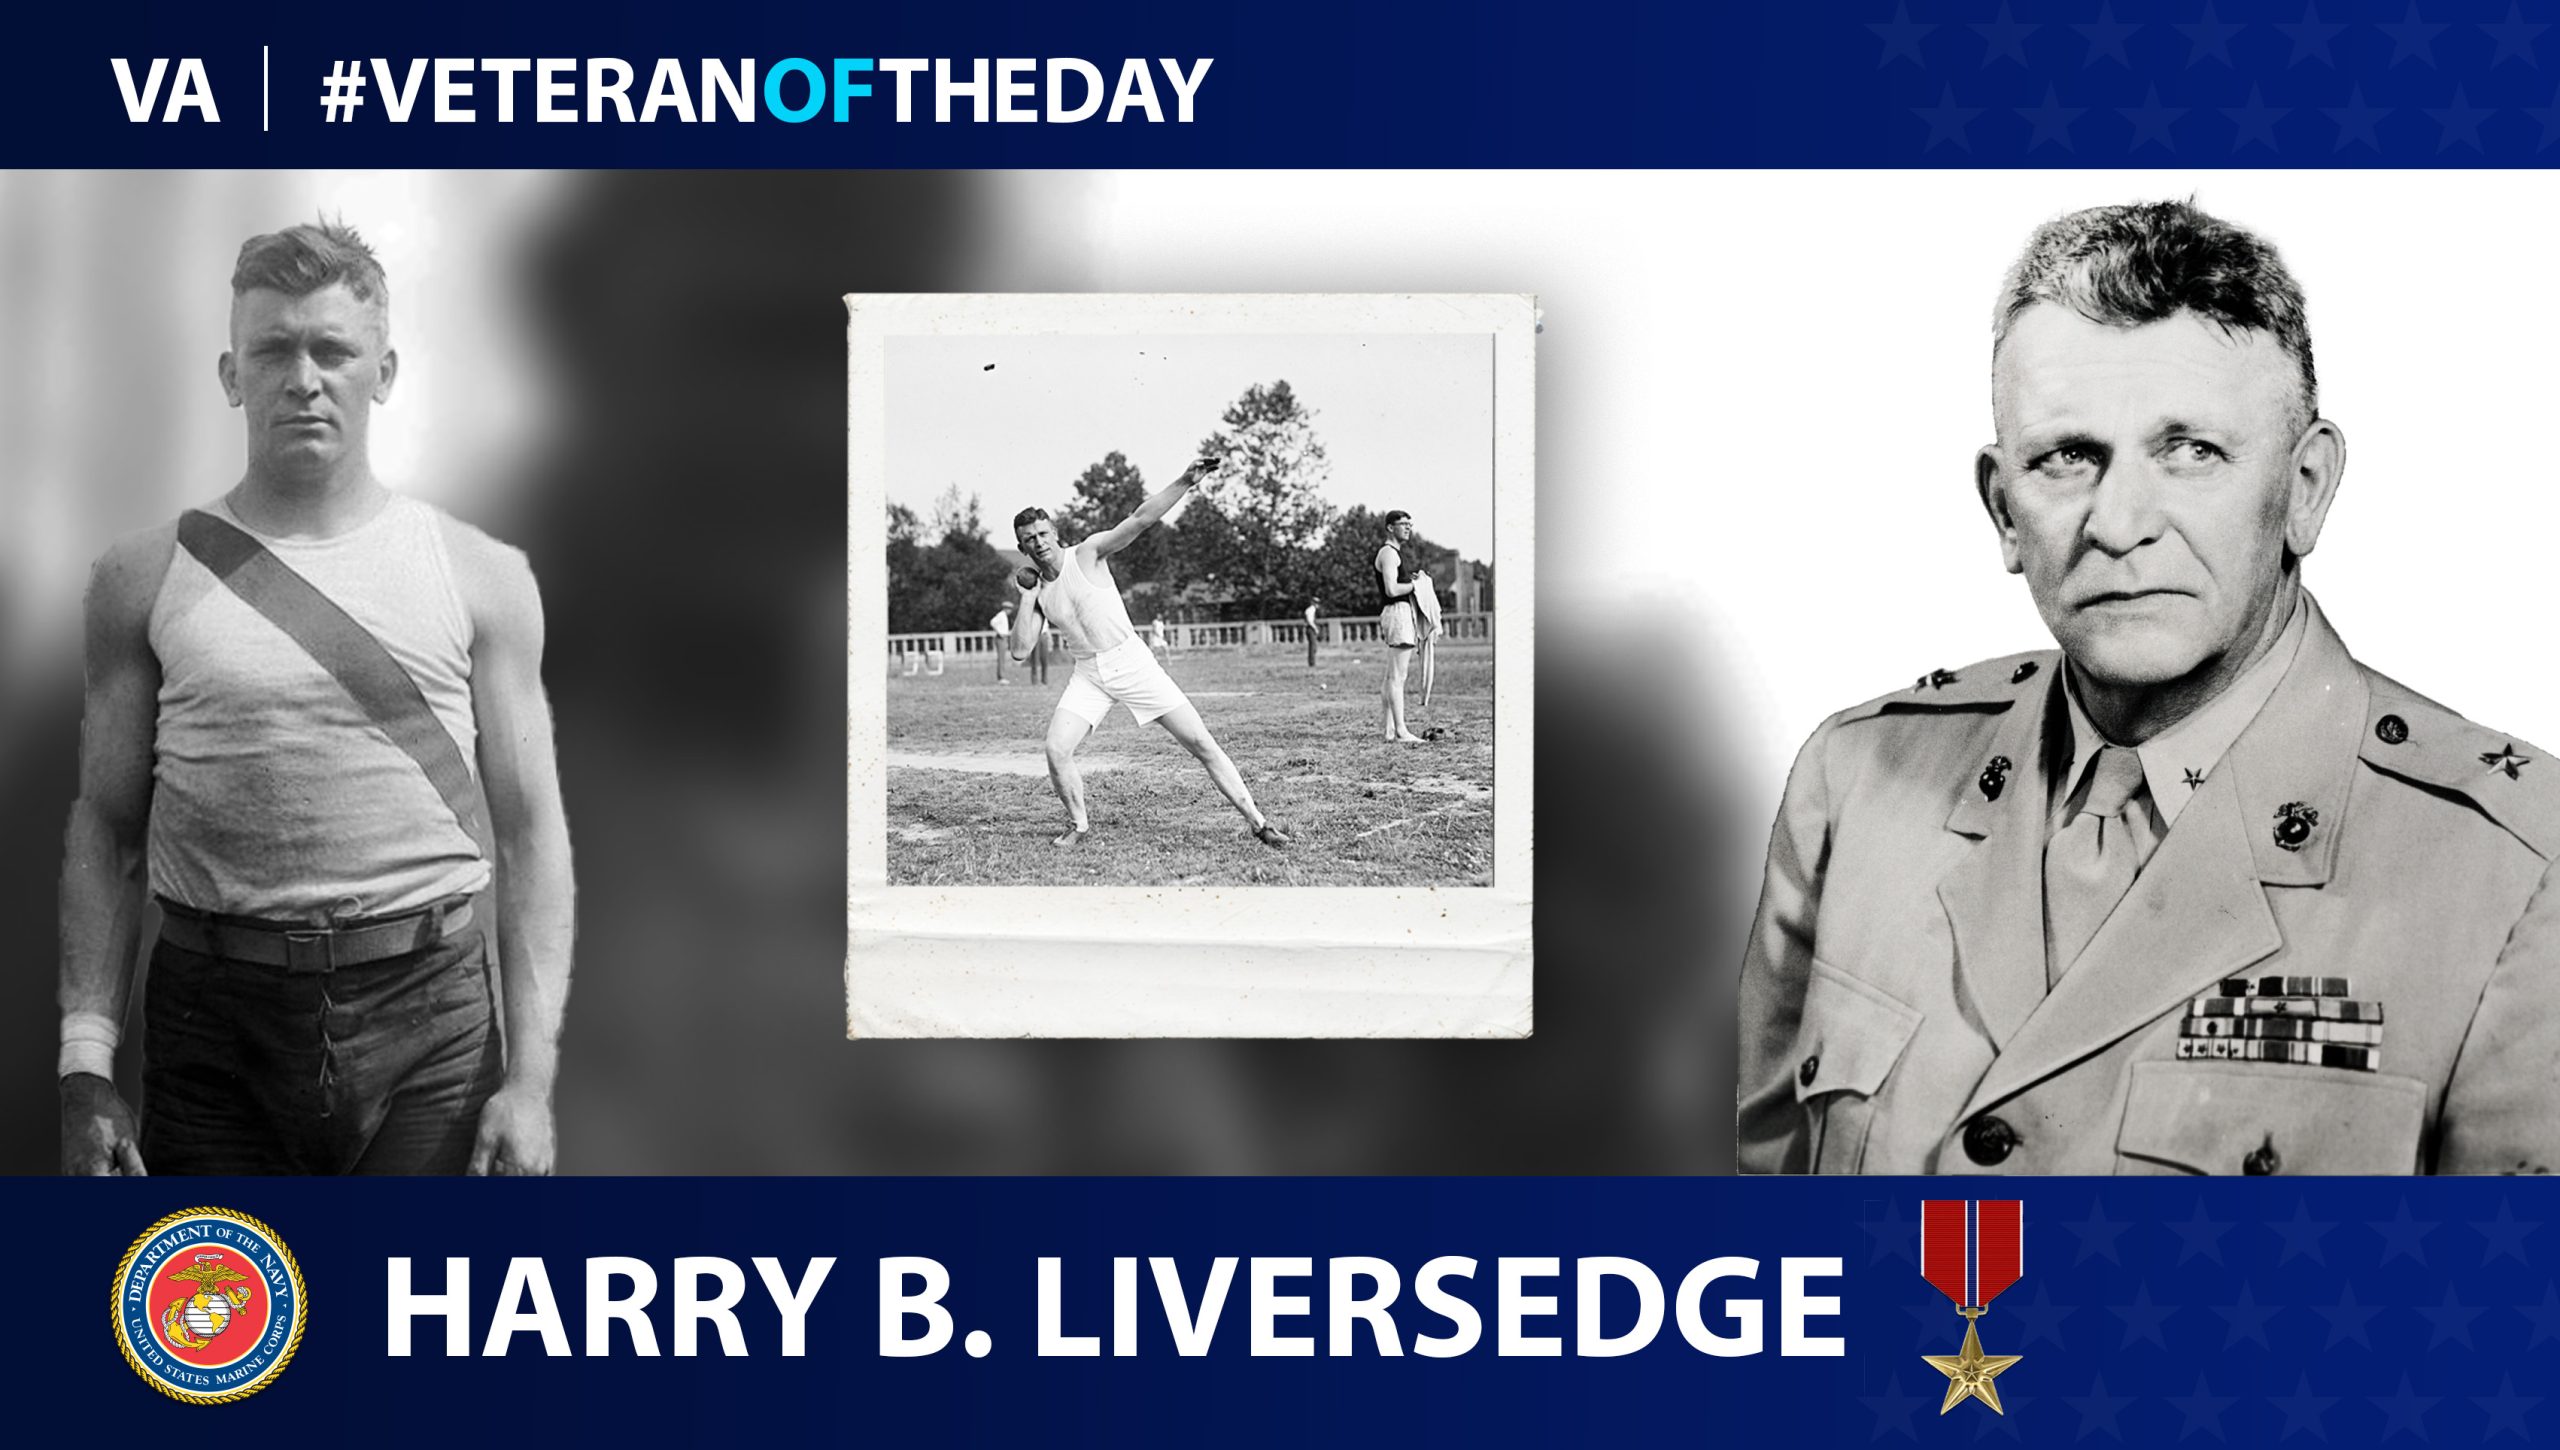 Marine Veteran Harry Liversedge is today’s Veteran of the Day.